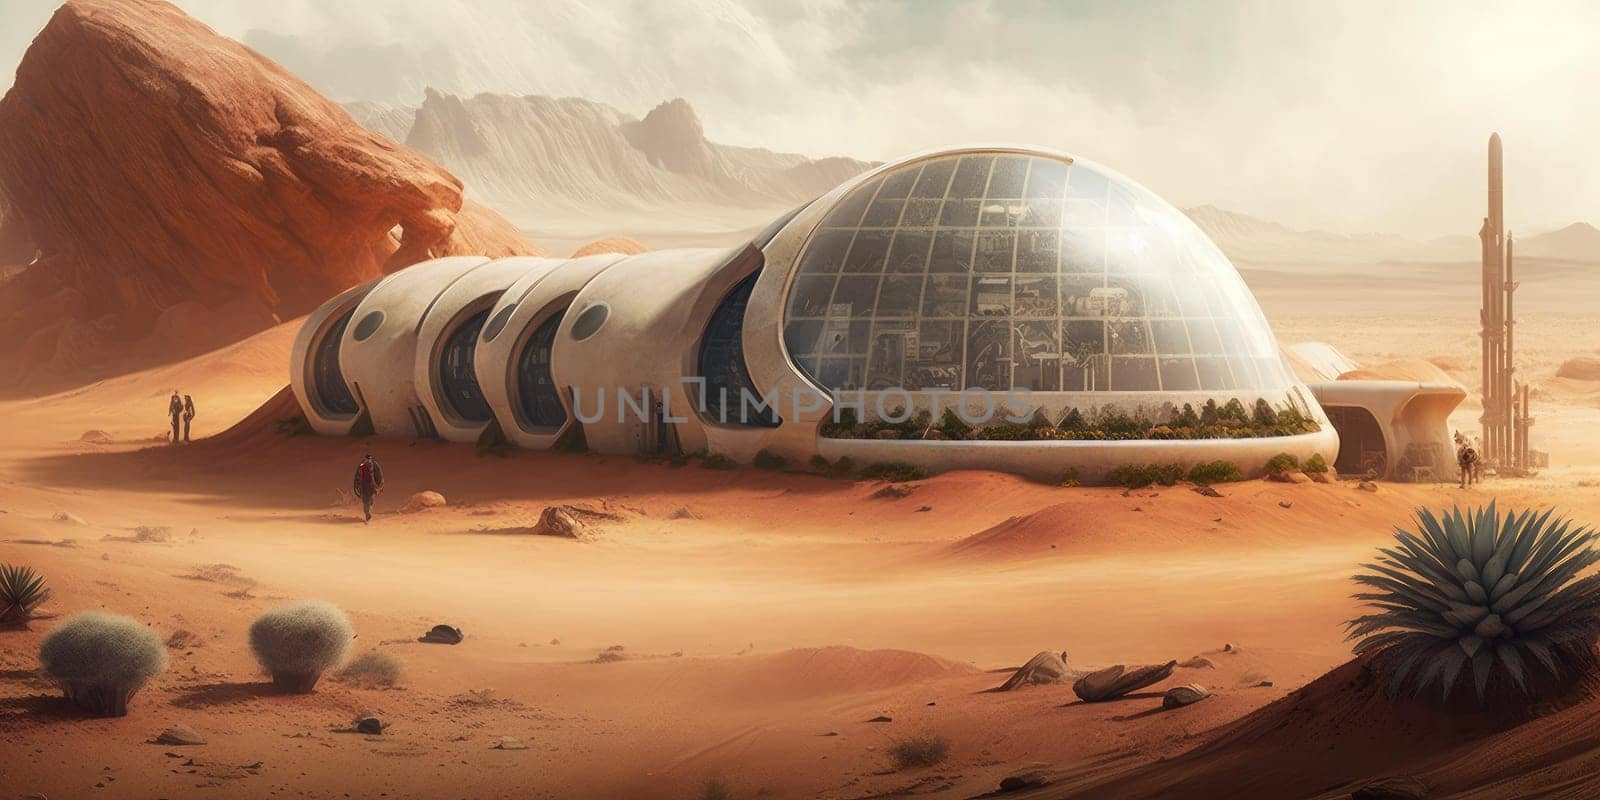 Futuristic building habitat on mars settlement from sci-fi novel by biancoblue